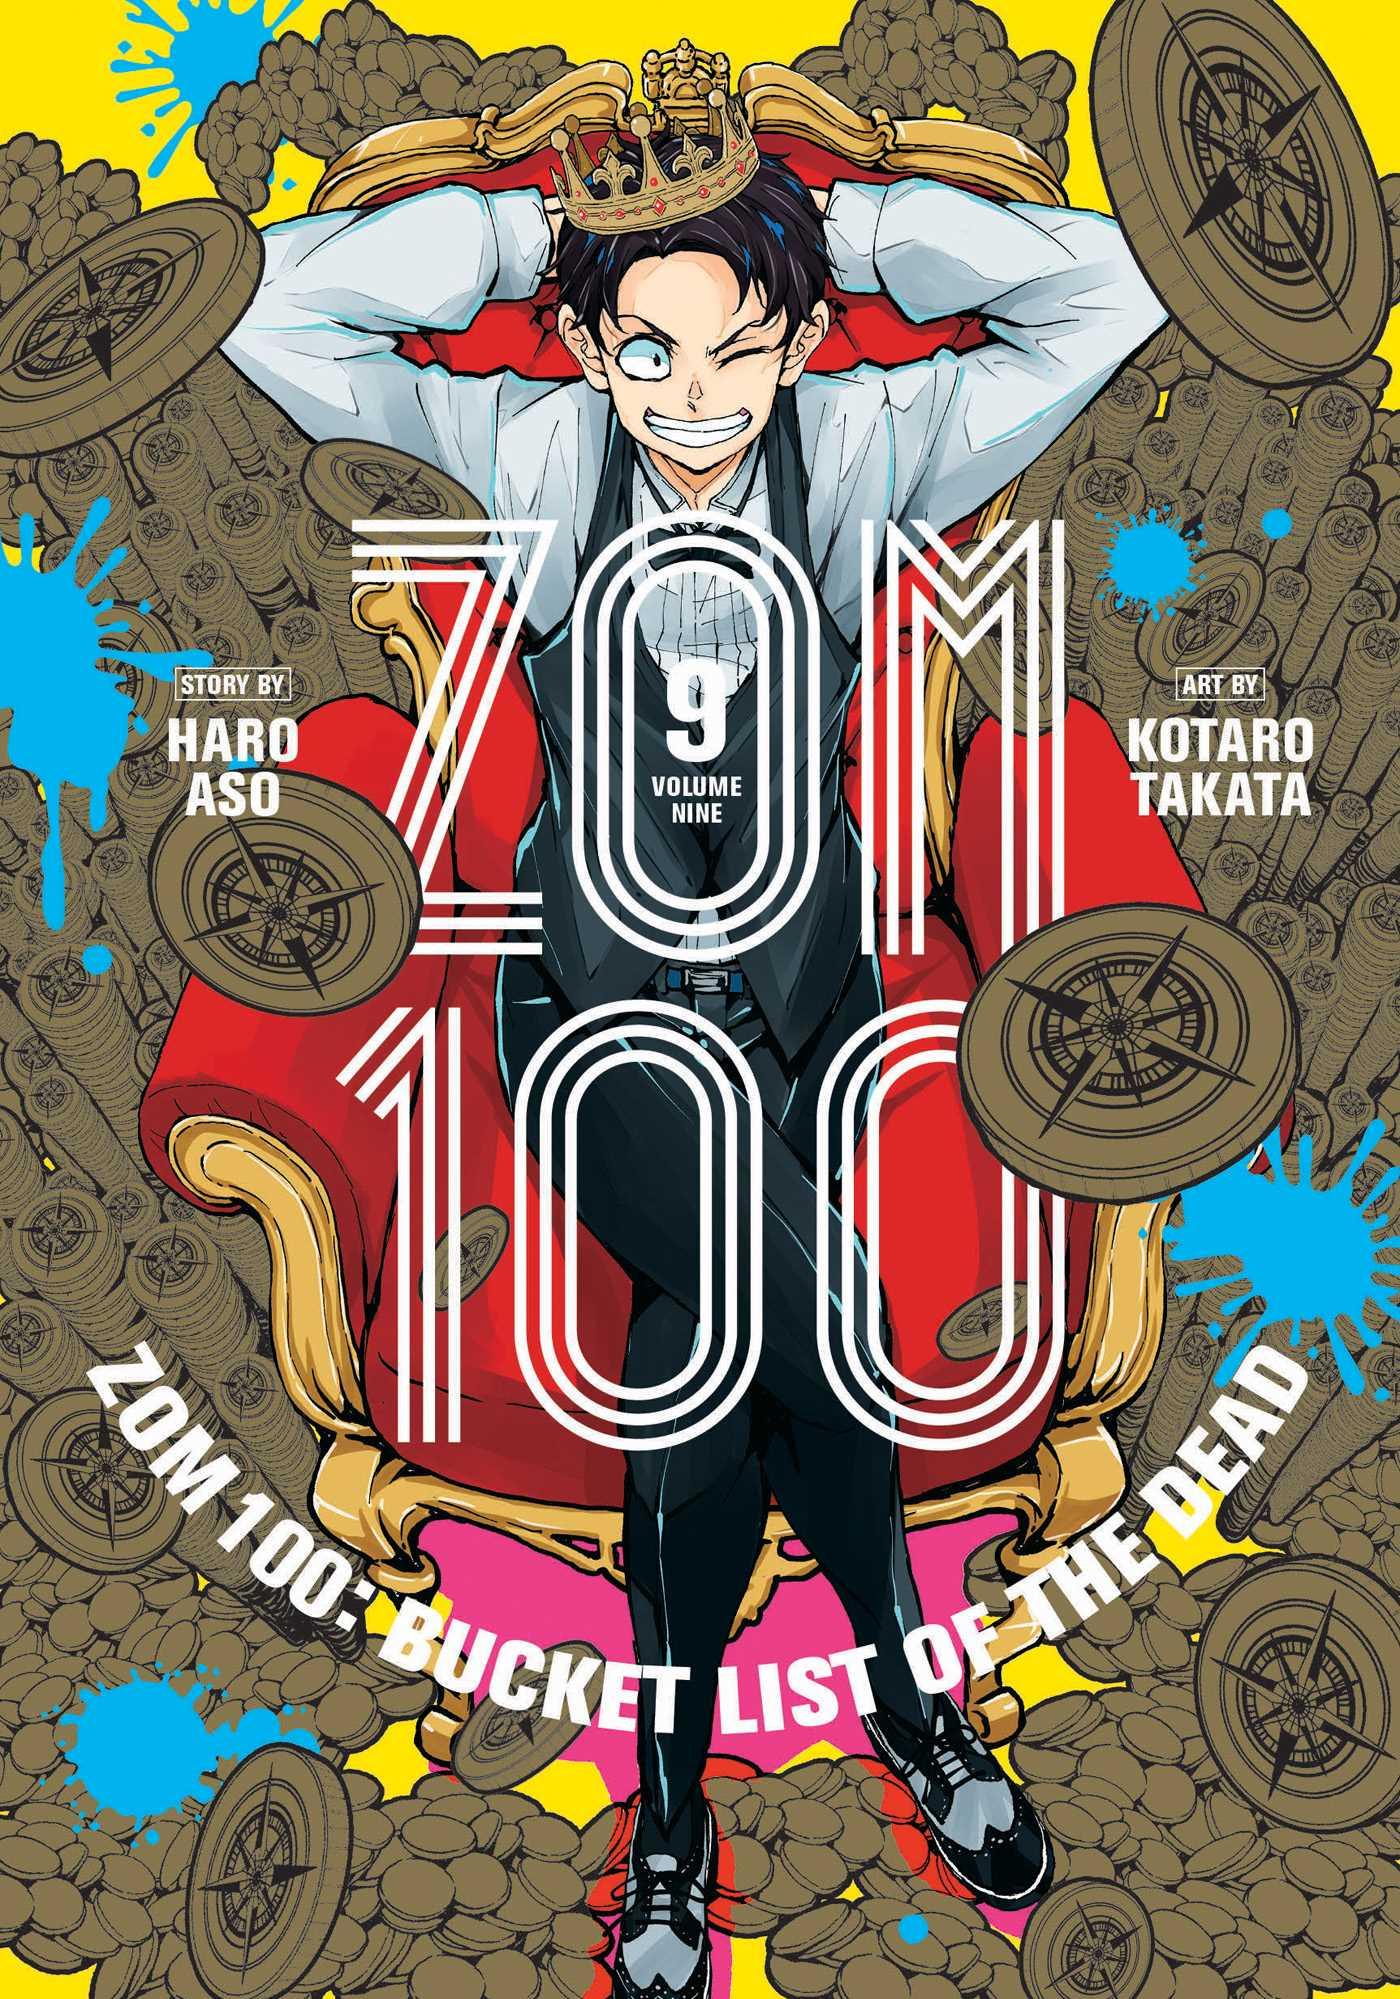 Zom 100 Bucket List of the Dead Vol 9 Book by Haro Aso